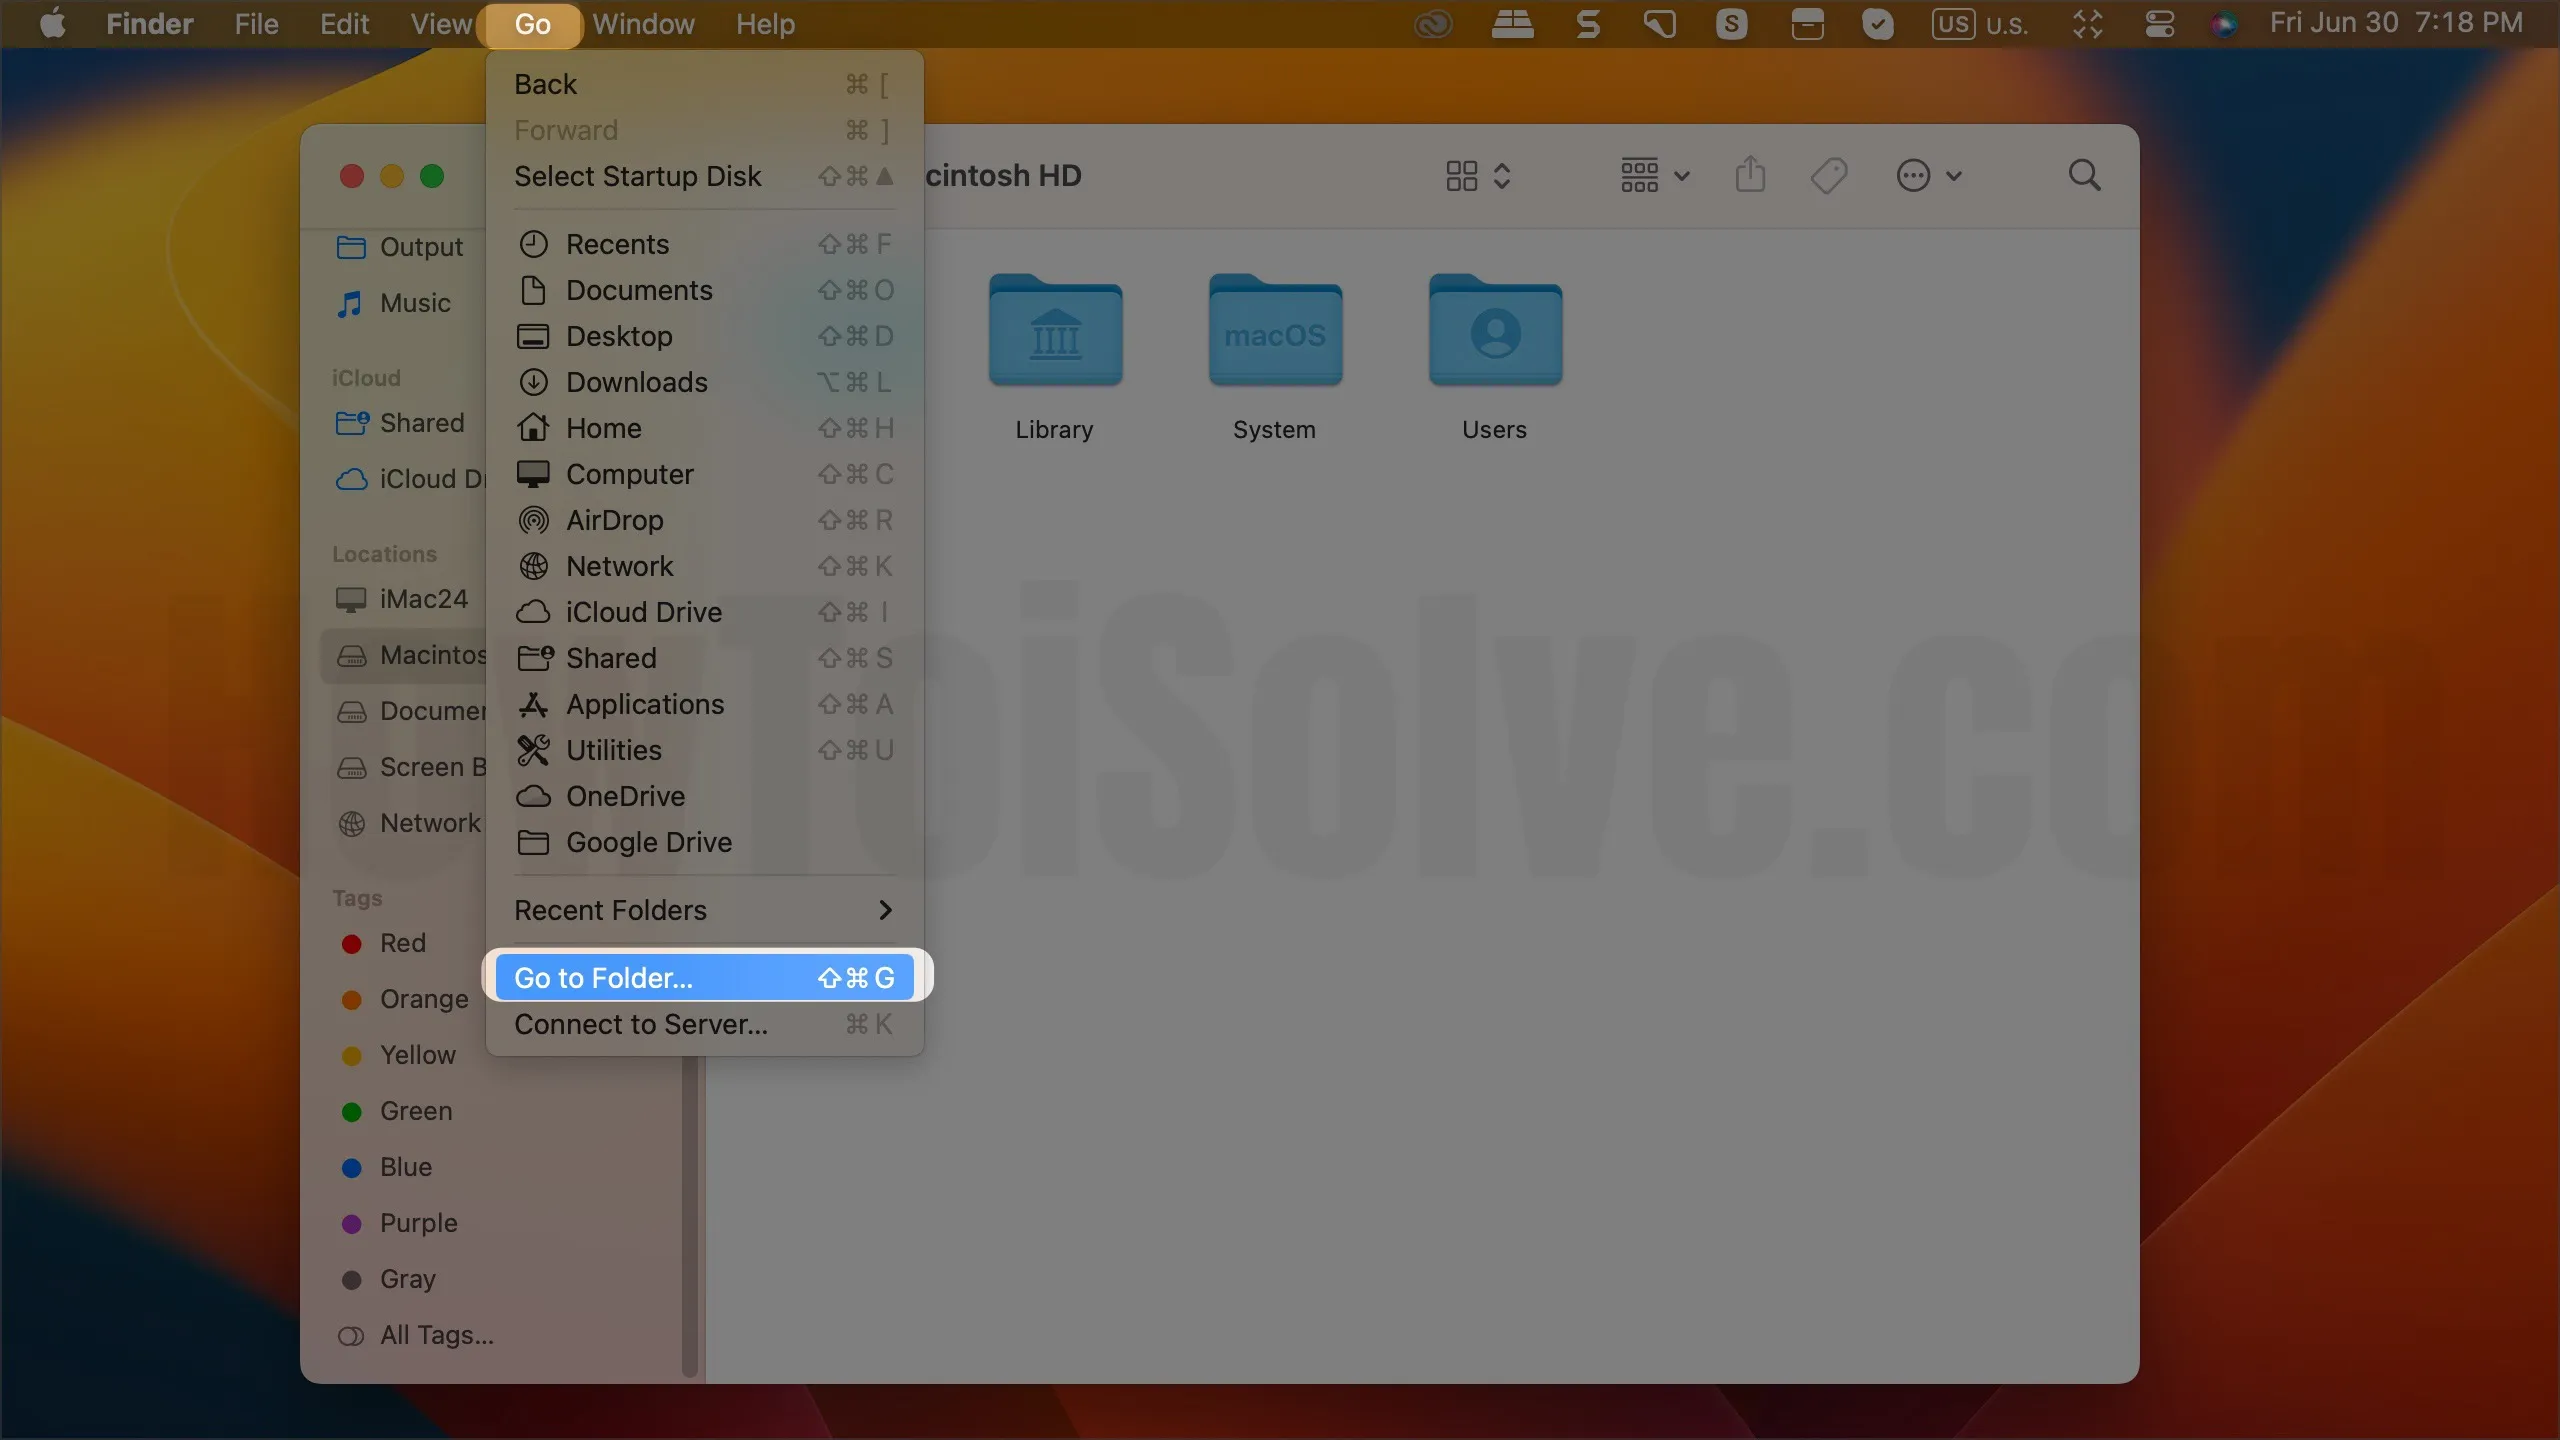 Go to Folder to Open Screensaver Folder on Mac